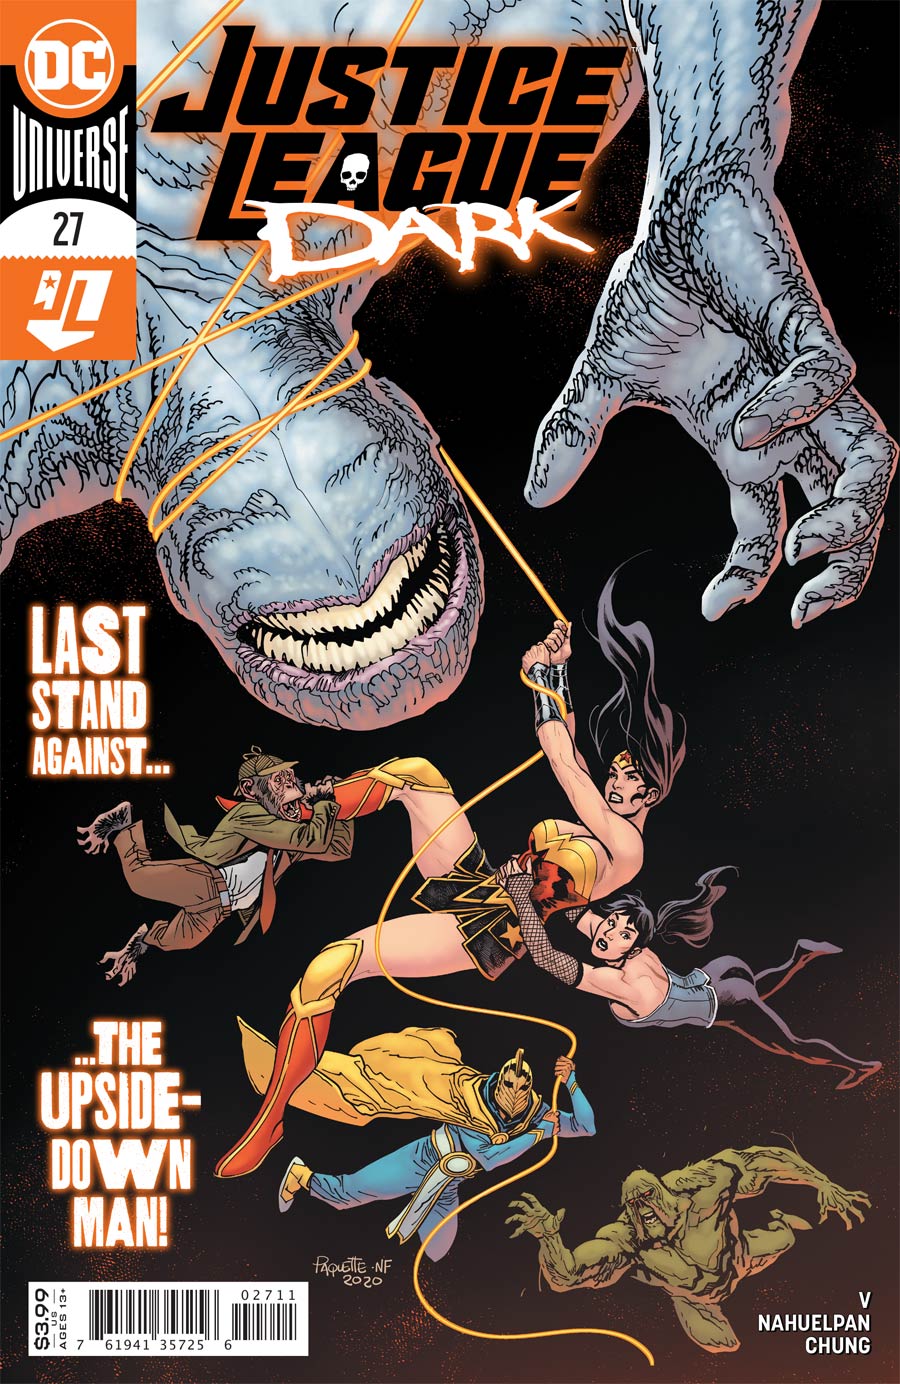 Justice League Dark #27 (2020)